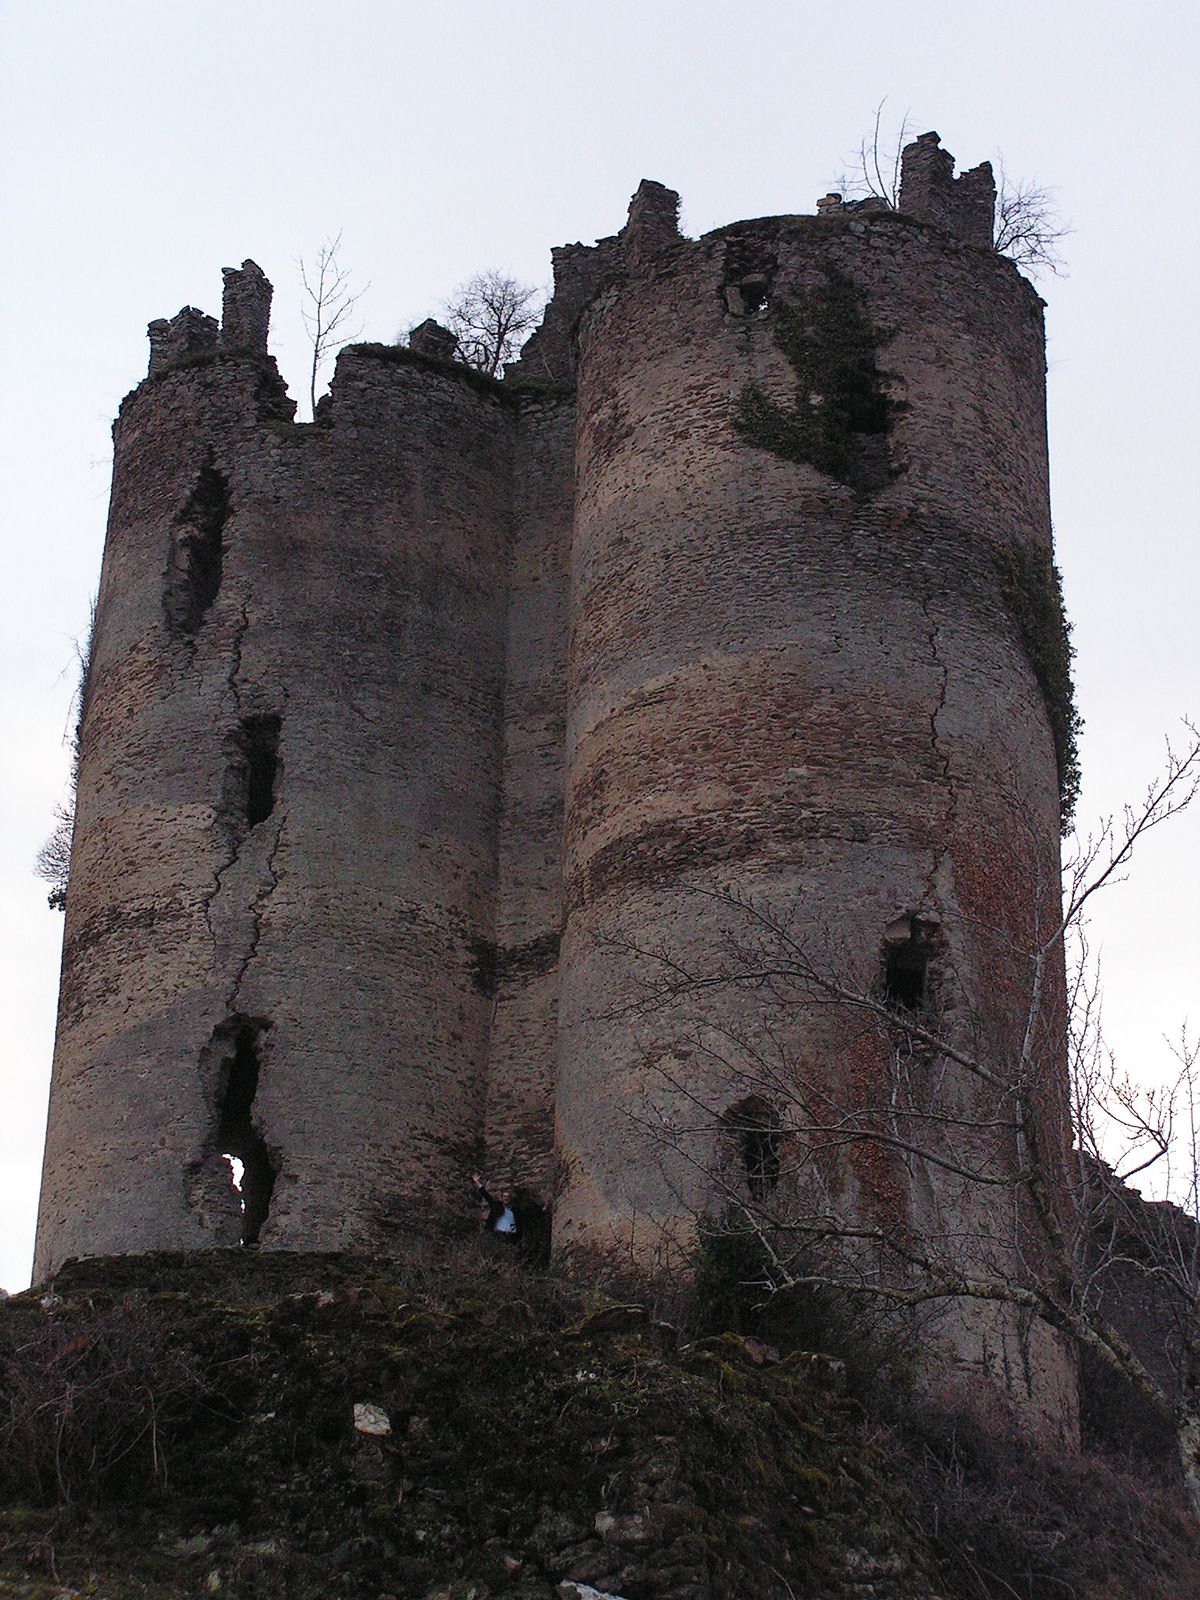 Object destroyed. Разрушенная башня. Разрушенная башня в Словакии. Разрушенная башня на востоке от замка кастроу. Тулуза замок.